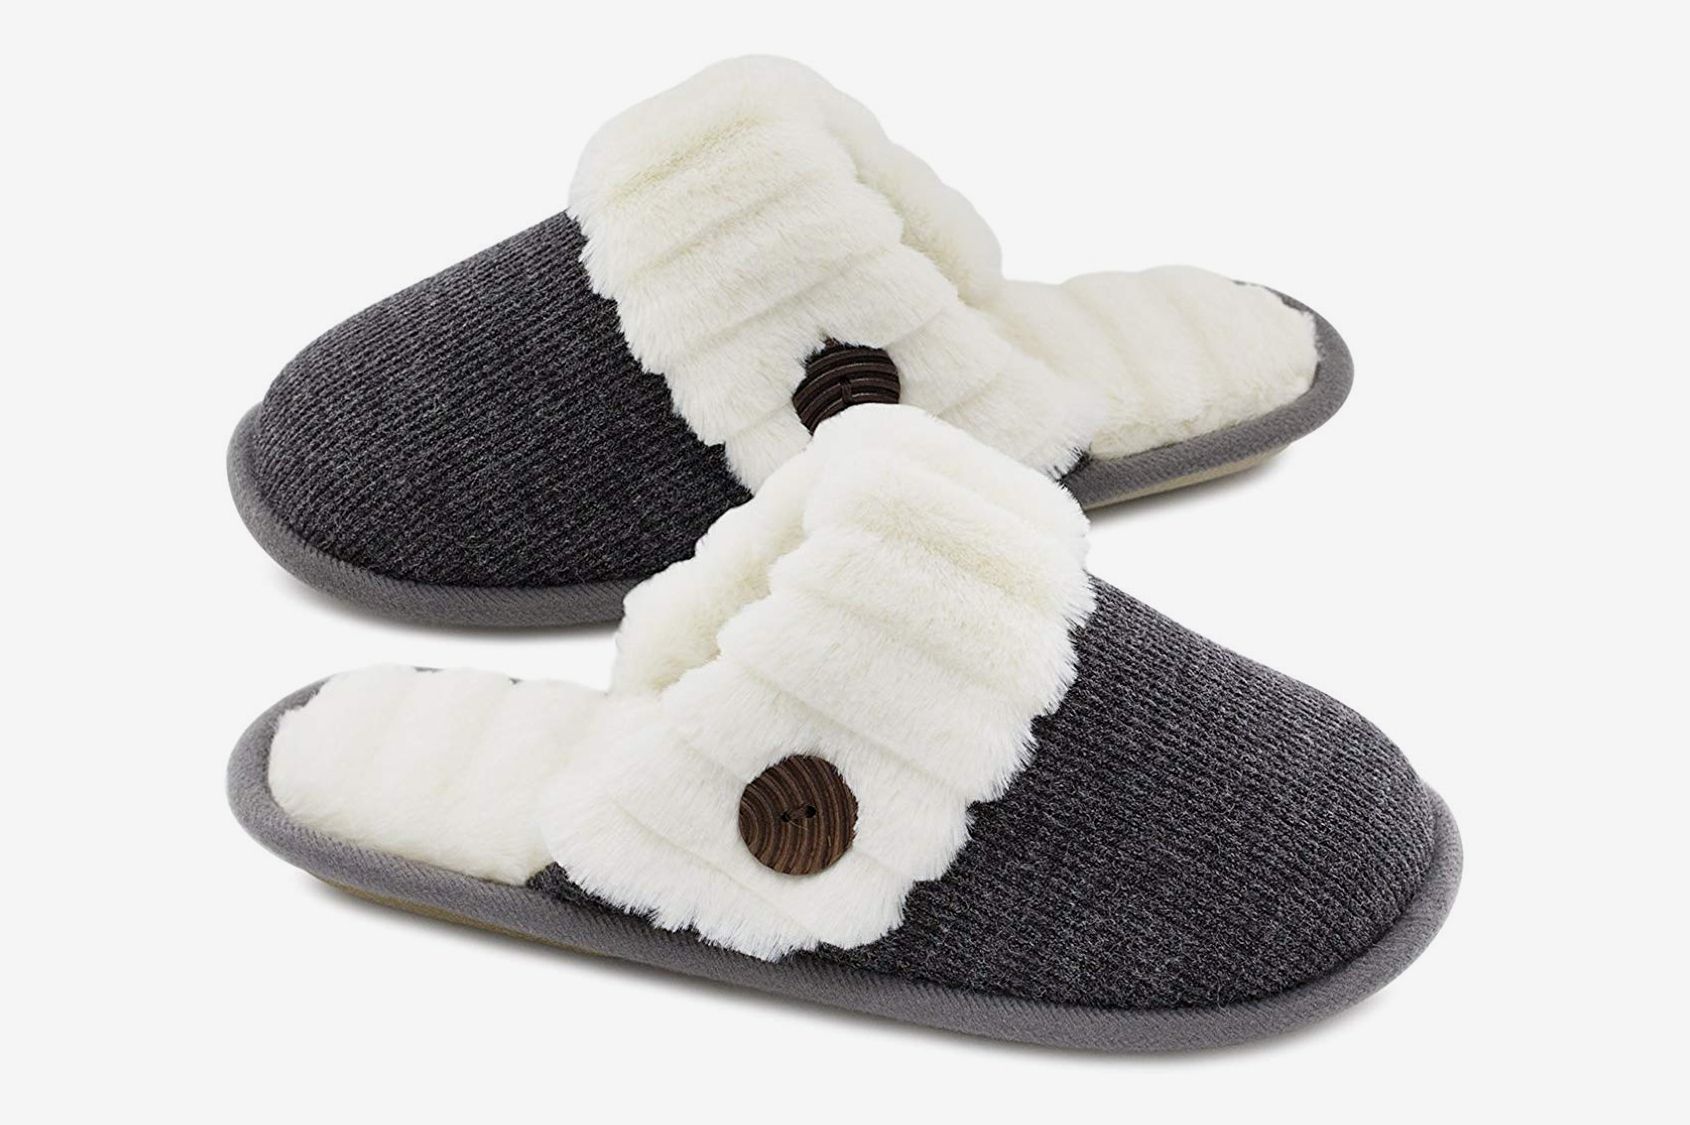 DOCILA House Slipper Boots for Women Warm Winter Memory Foam Plush Lining Indoor Gripper Socks Fuzzy Non Skip Booties Shoes